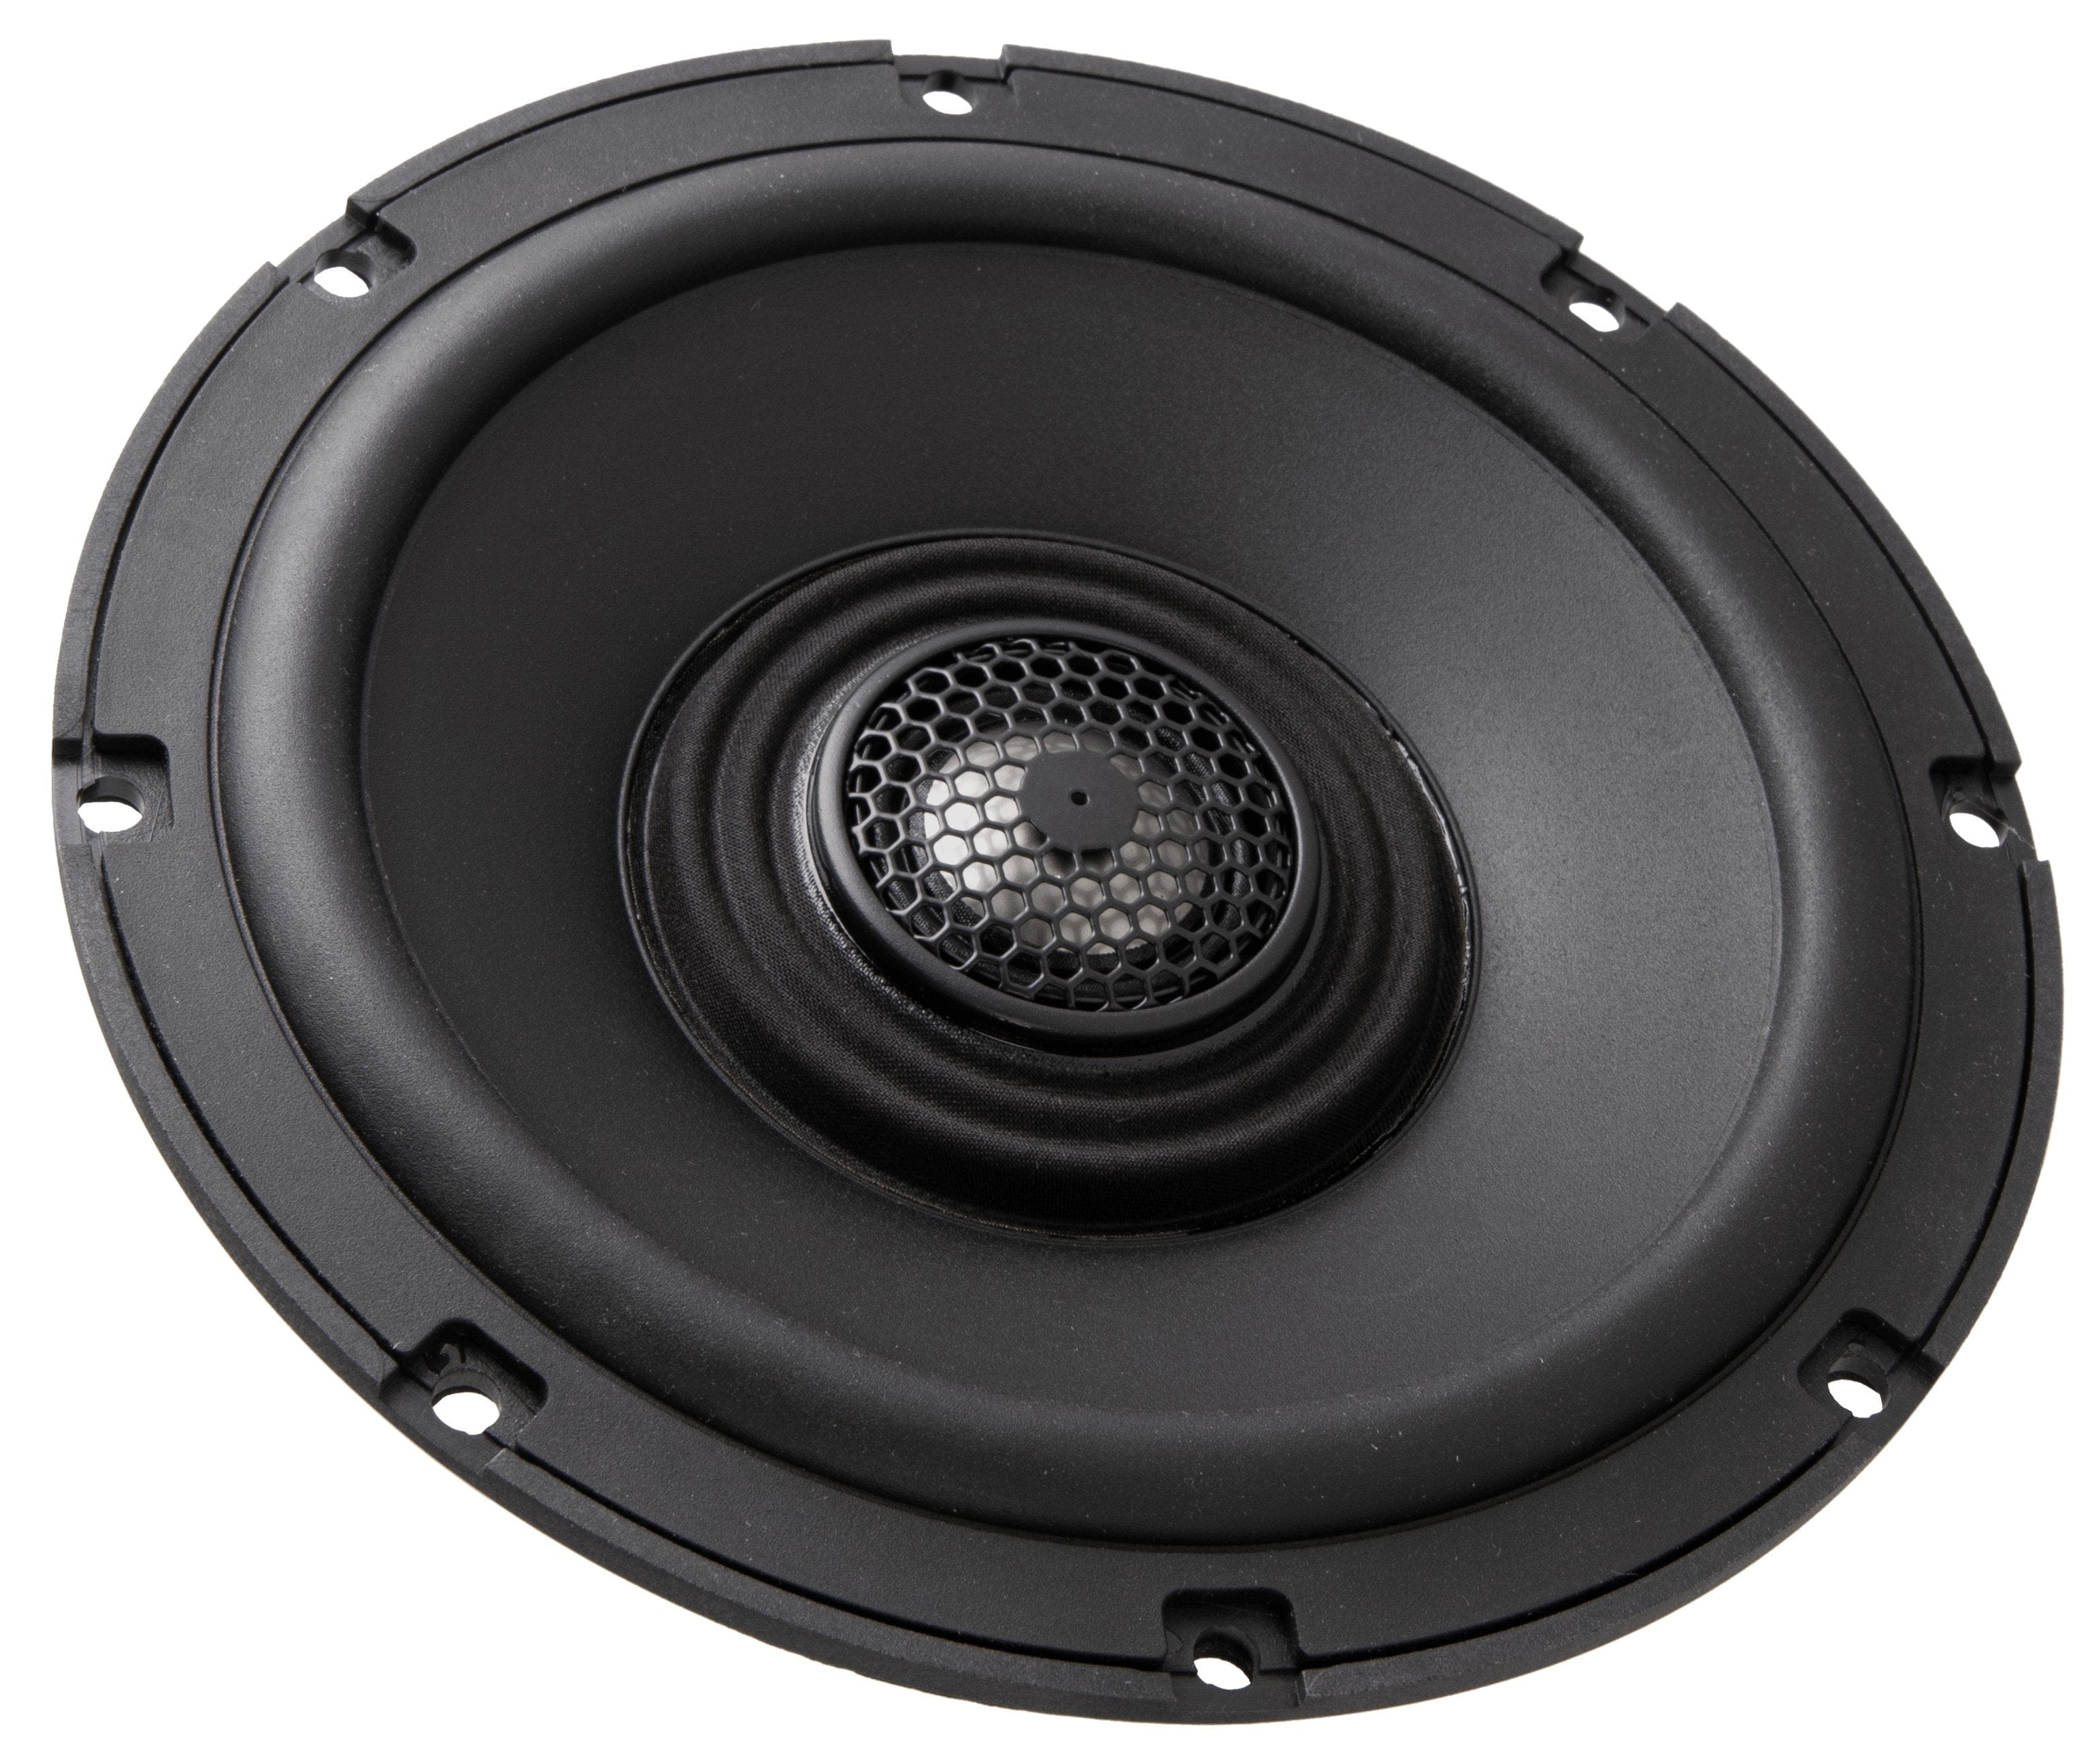 Soundstream Audio - Speakers Soundstream Premium 6.5" (4Ω) Motorcycle Speaker Pair